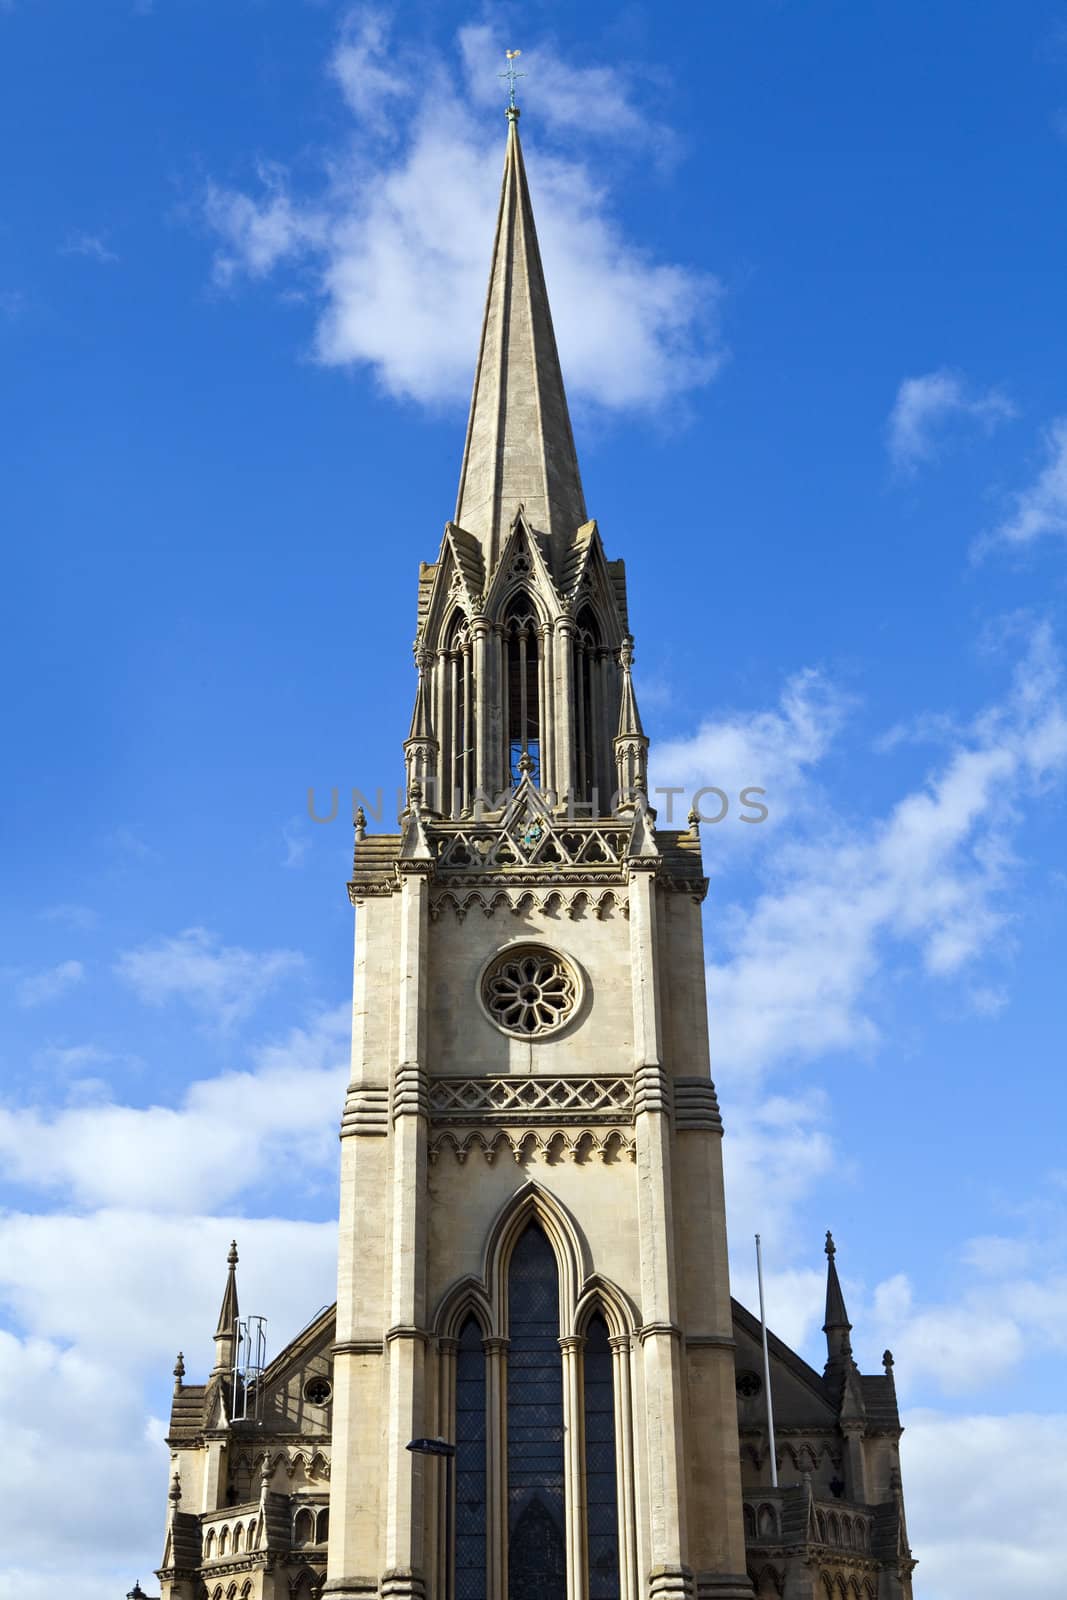 St. Michael's church in Bath, Somerset.